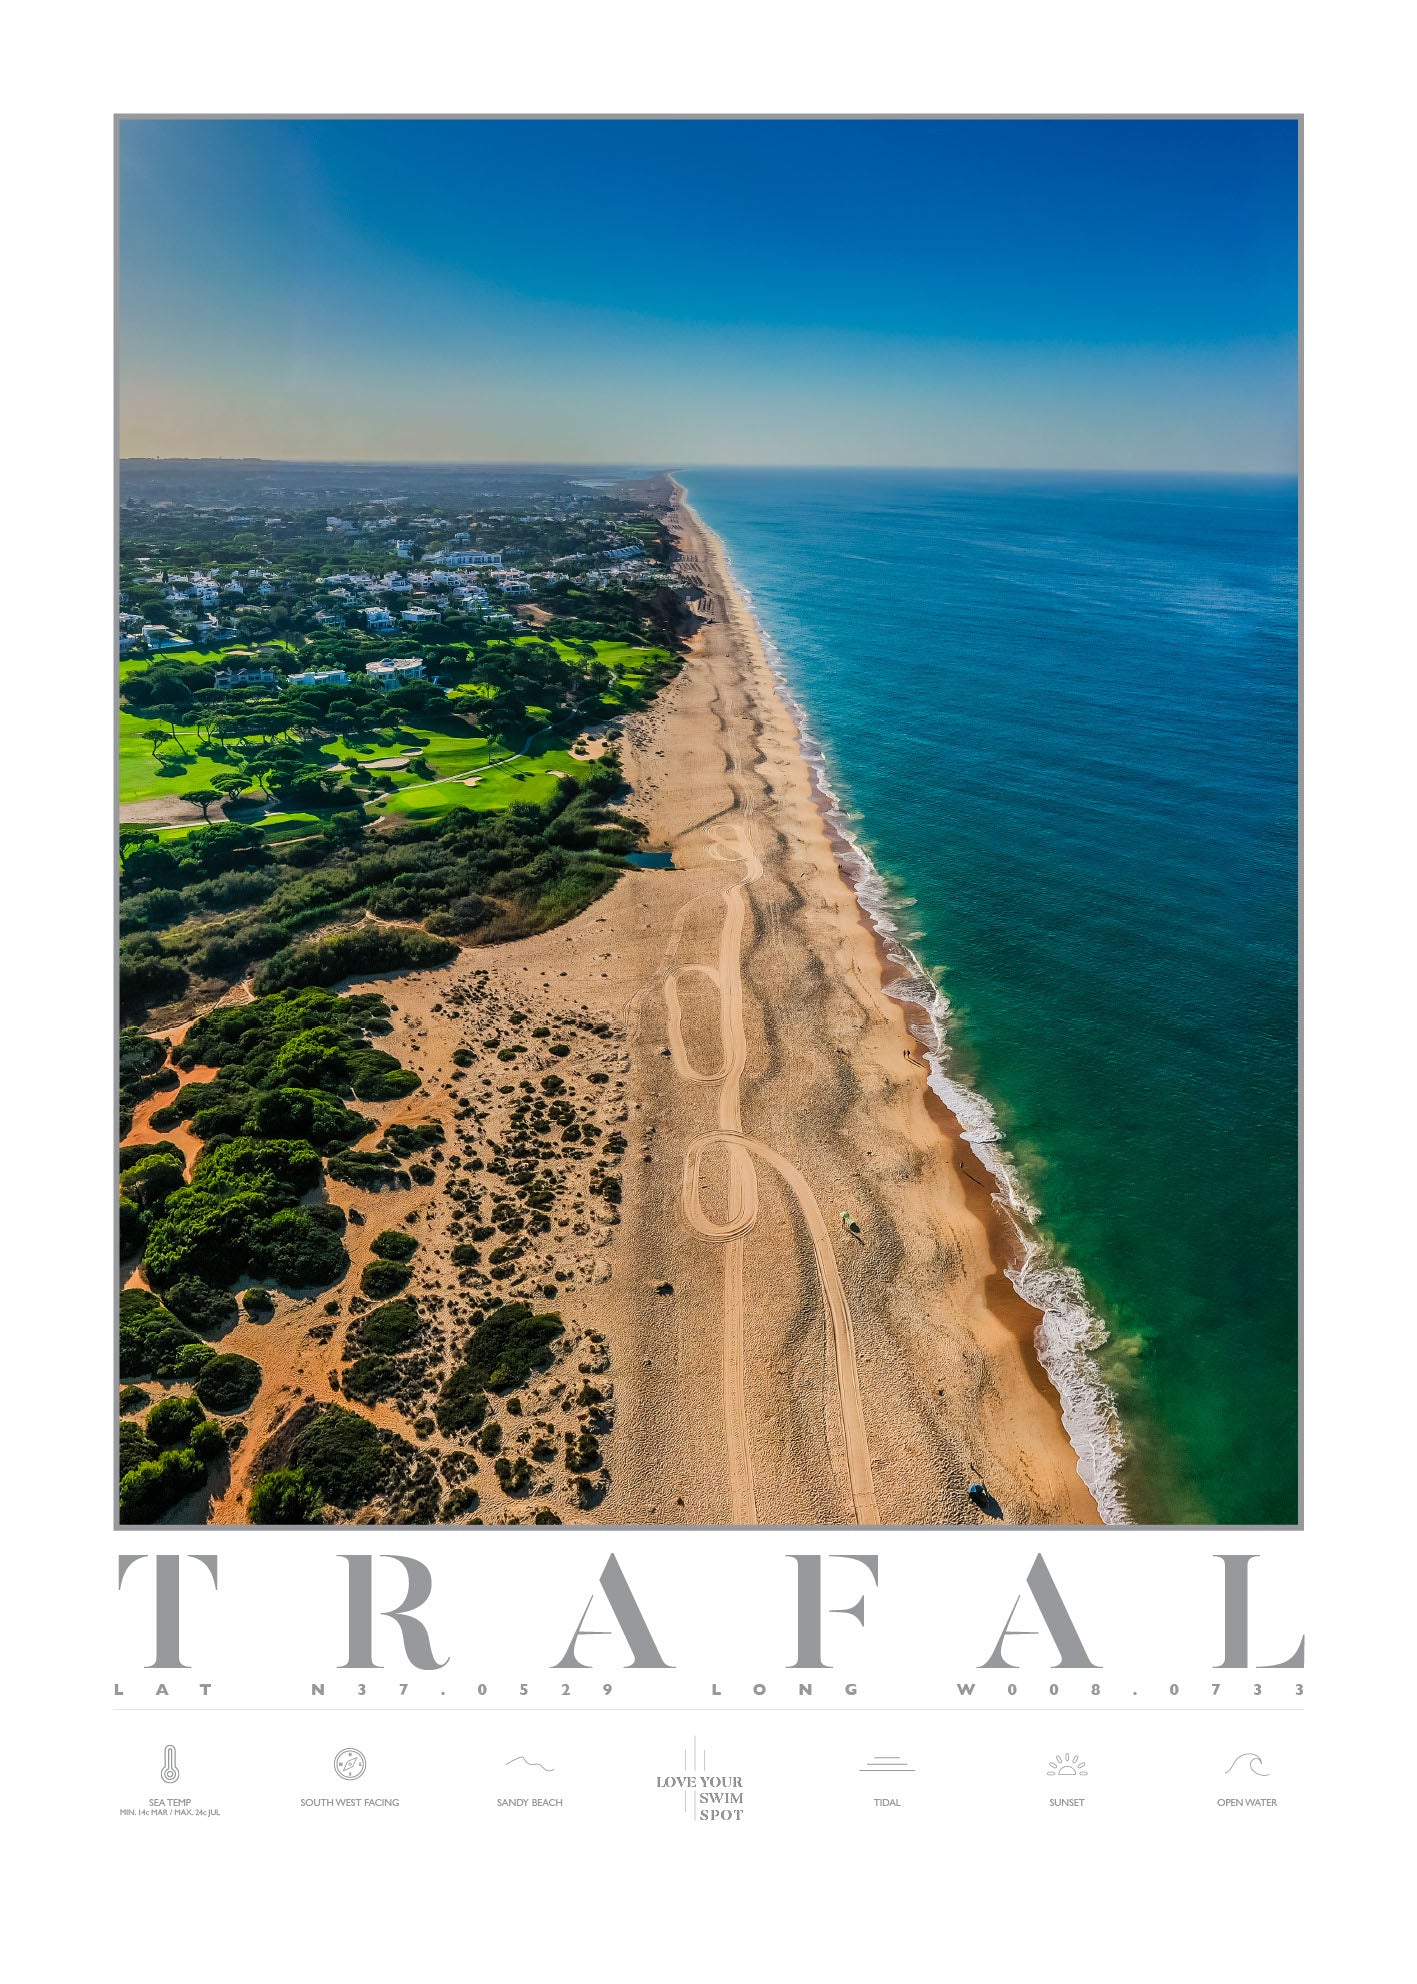 TRAFAL BEACH PORTUGAL